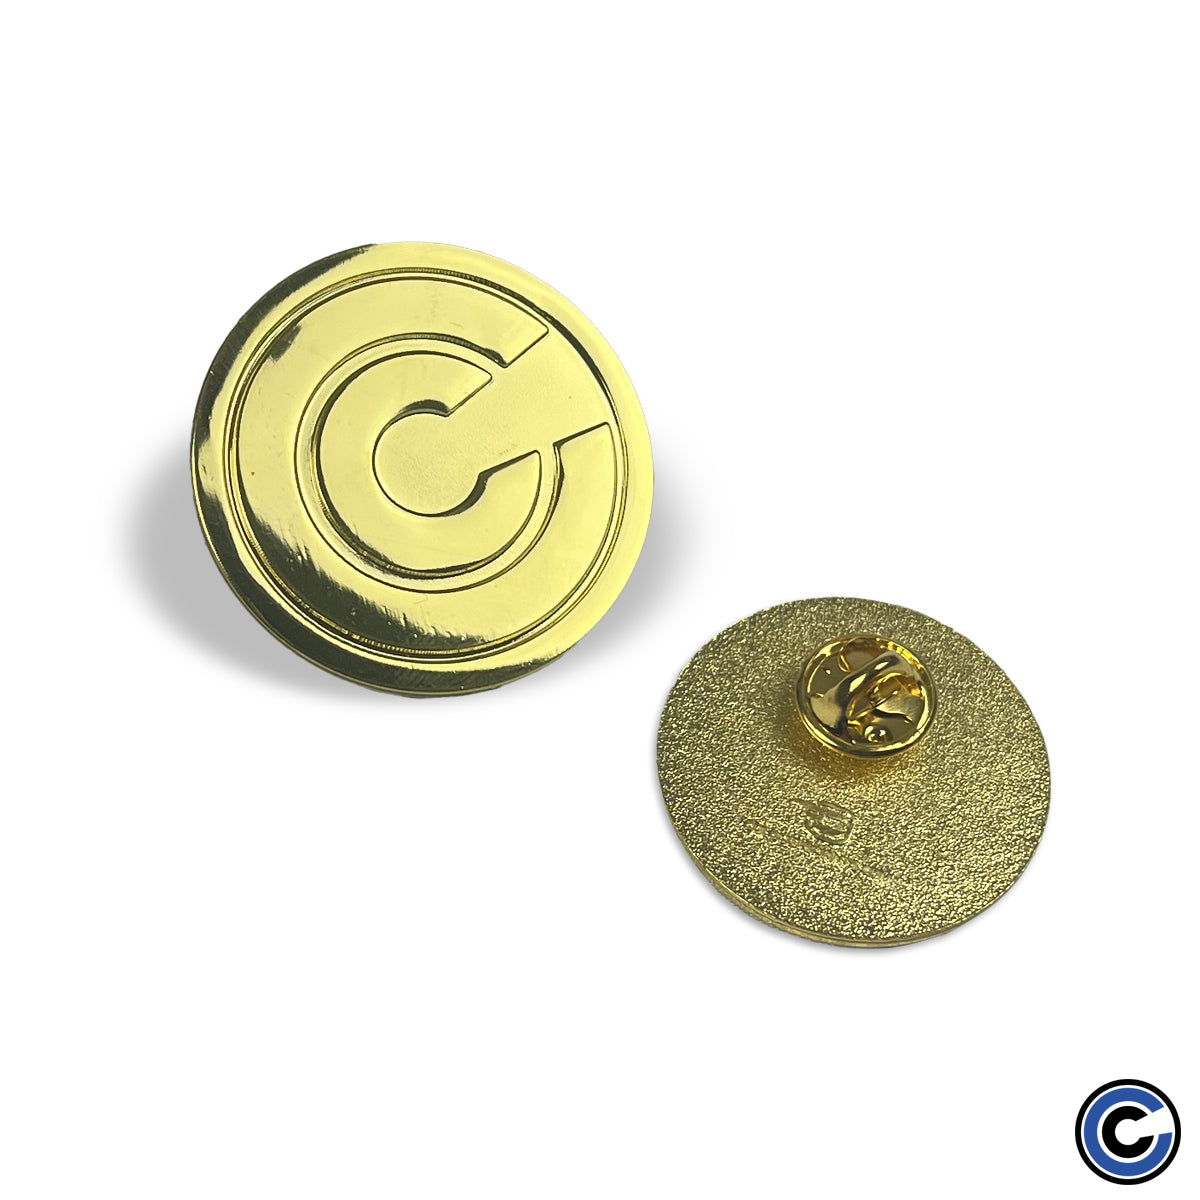 Cold Cuts "CCM Gold" Pin